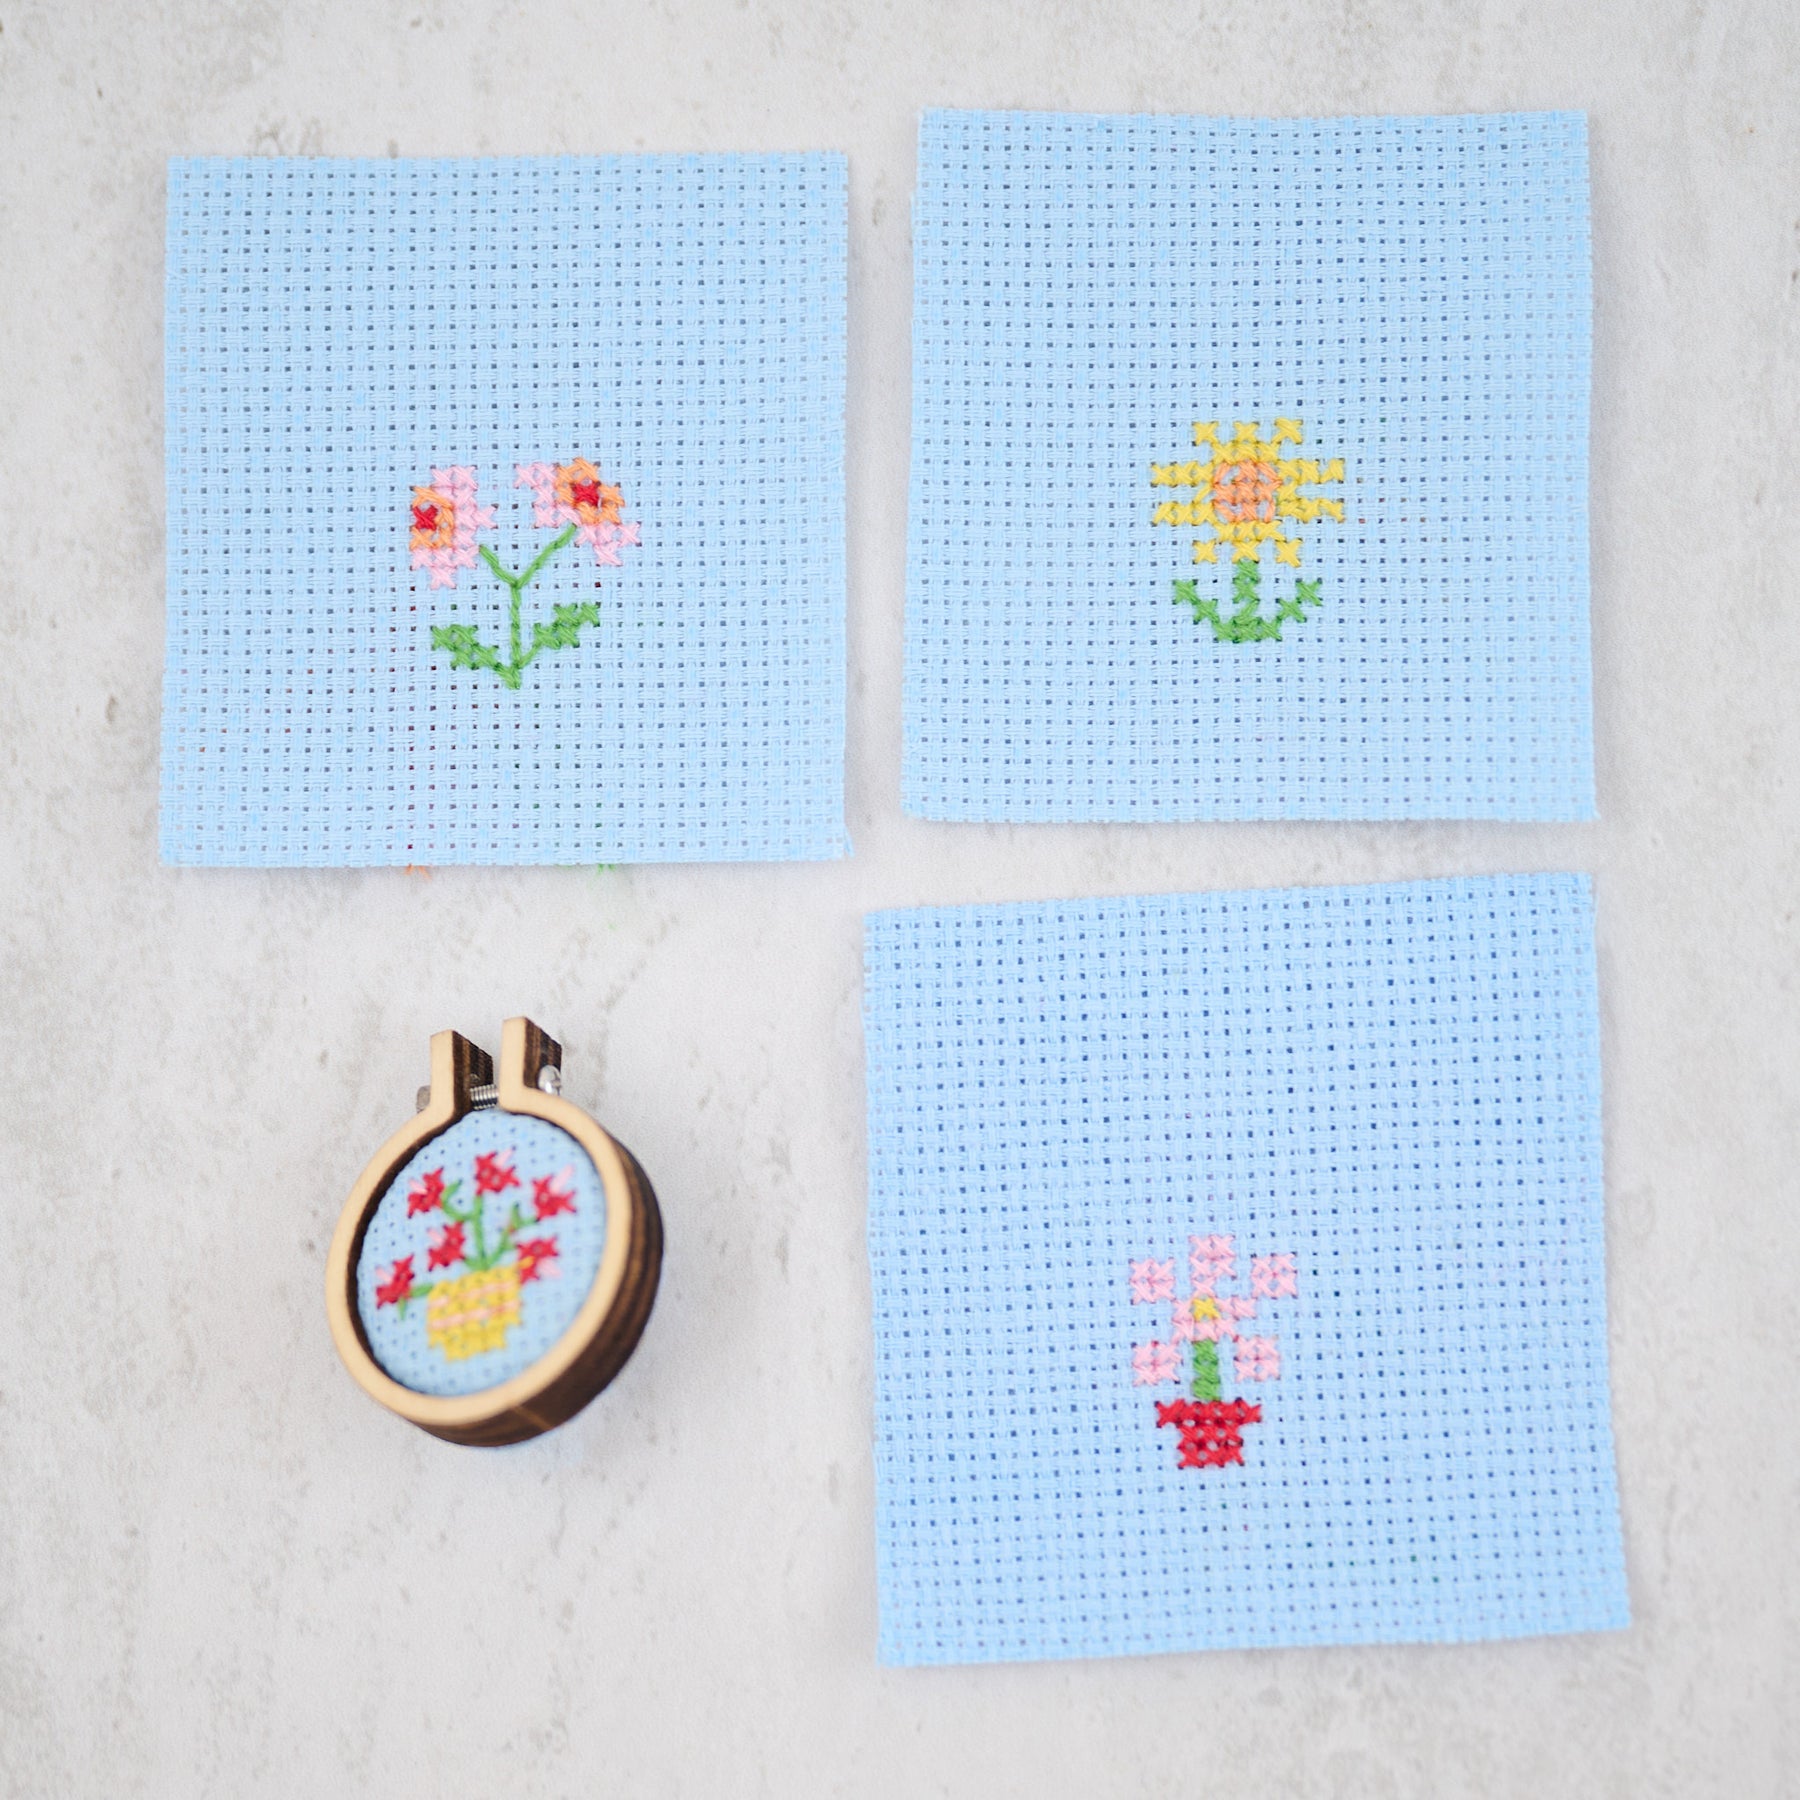 Bunch of Flowers Mini Cross Stitch Kit In A Matchbox